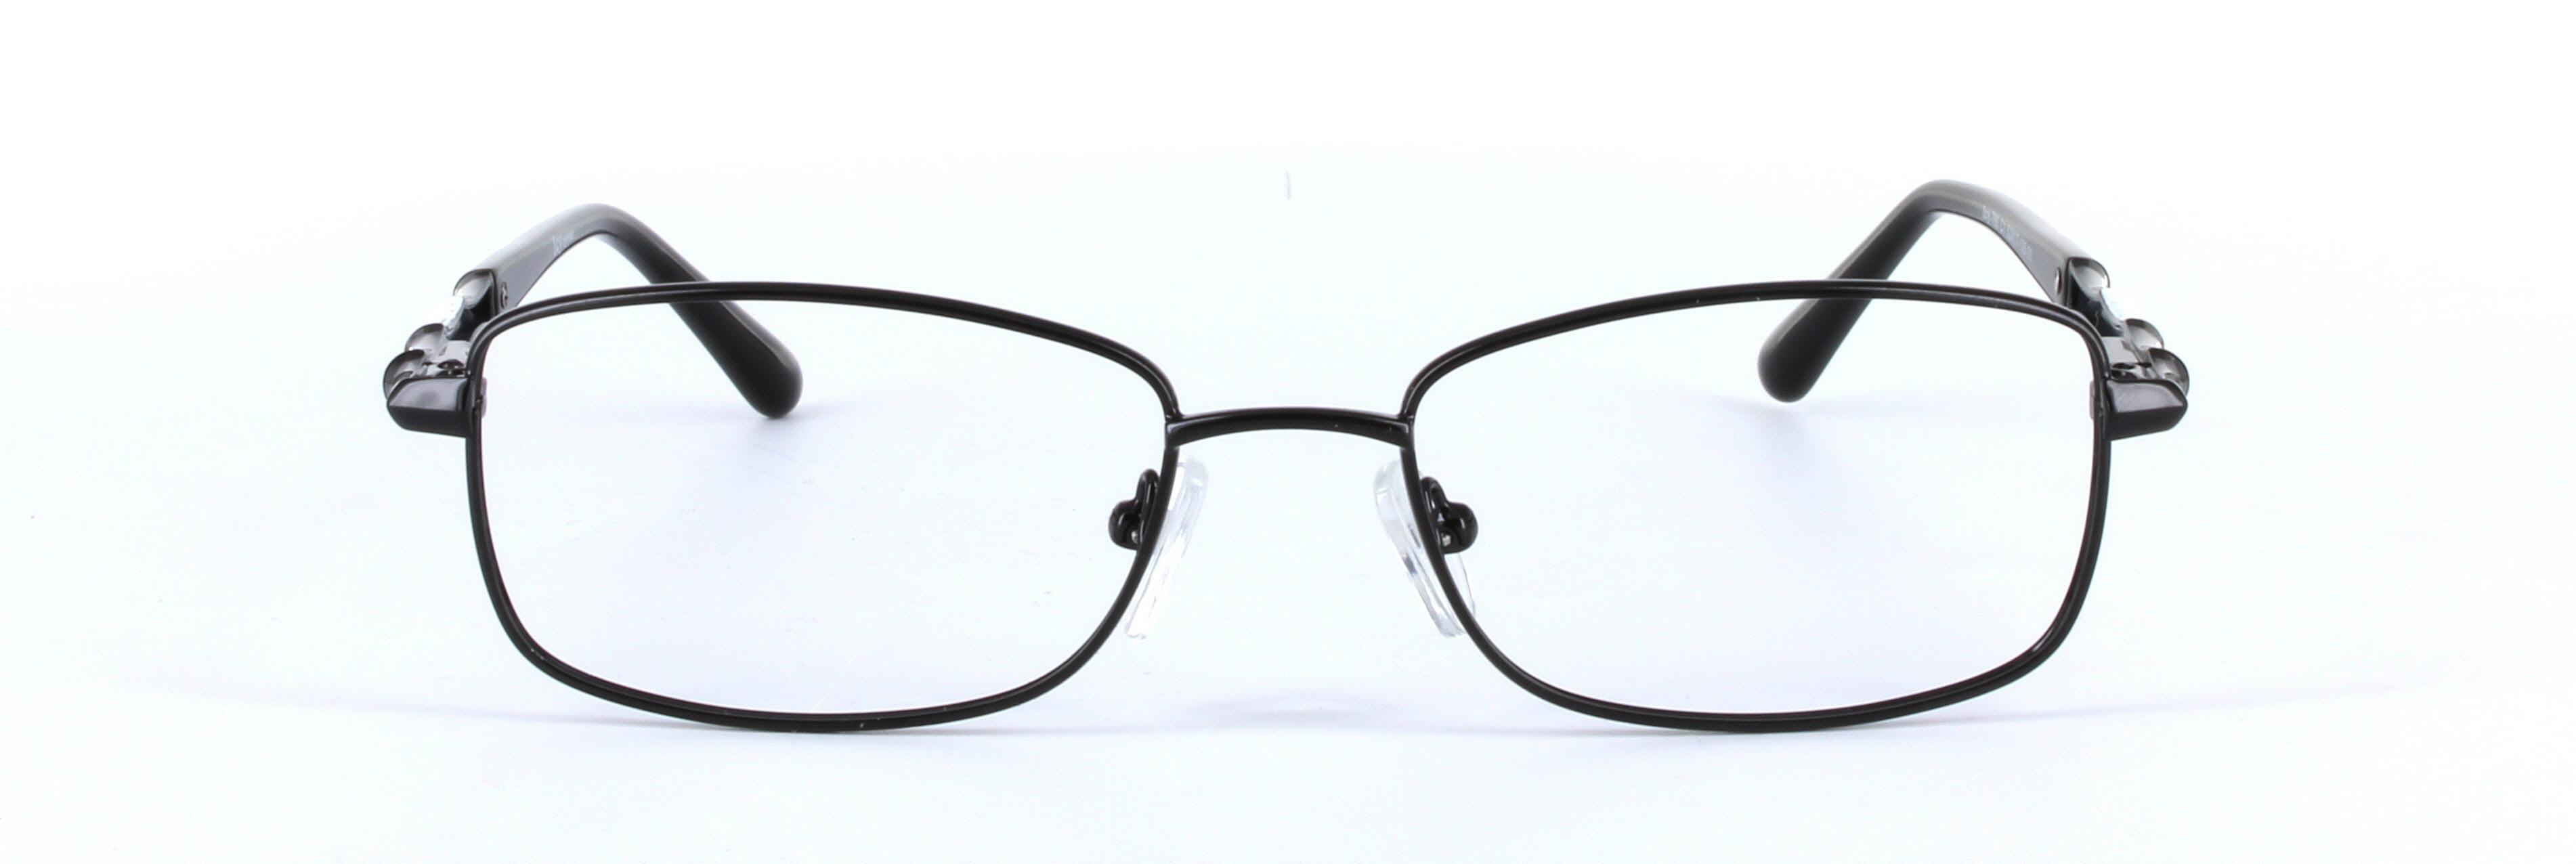 Kirsty Black Full Rim Oval Rectangular Metal Glasses - Image View 5